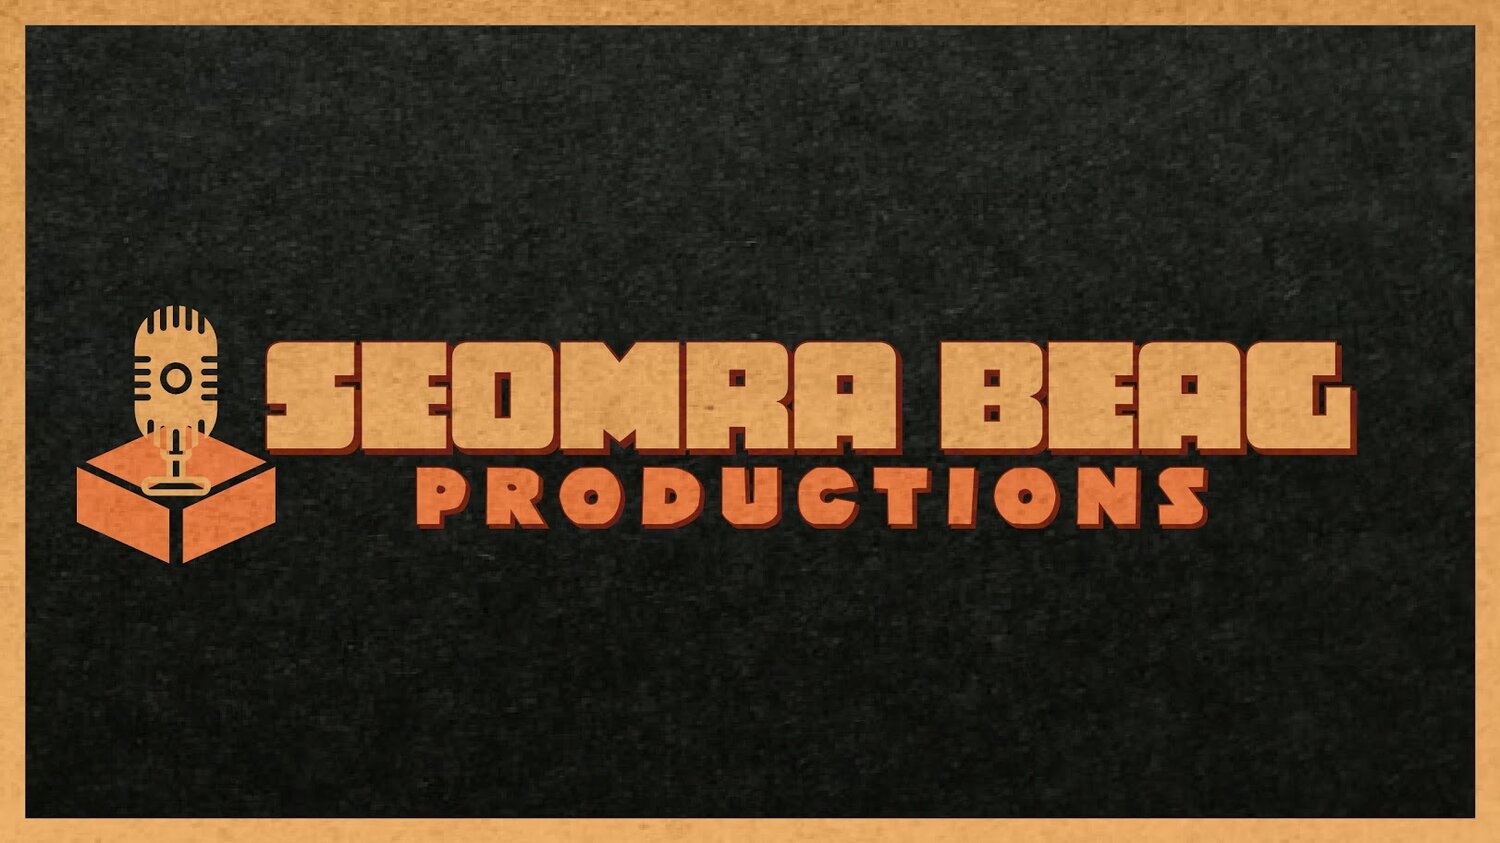 Seomra Beag Productions